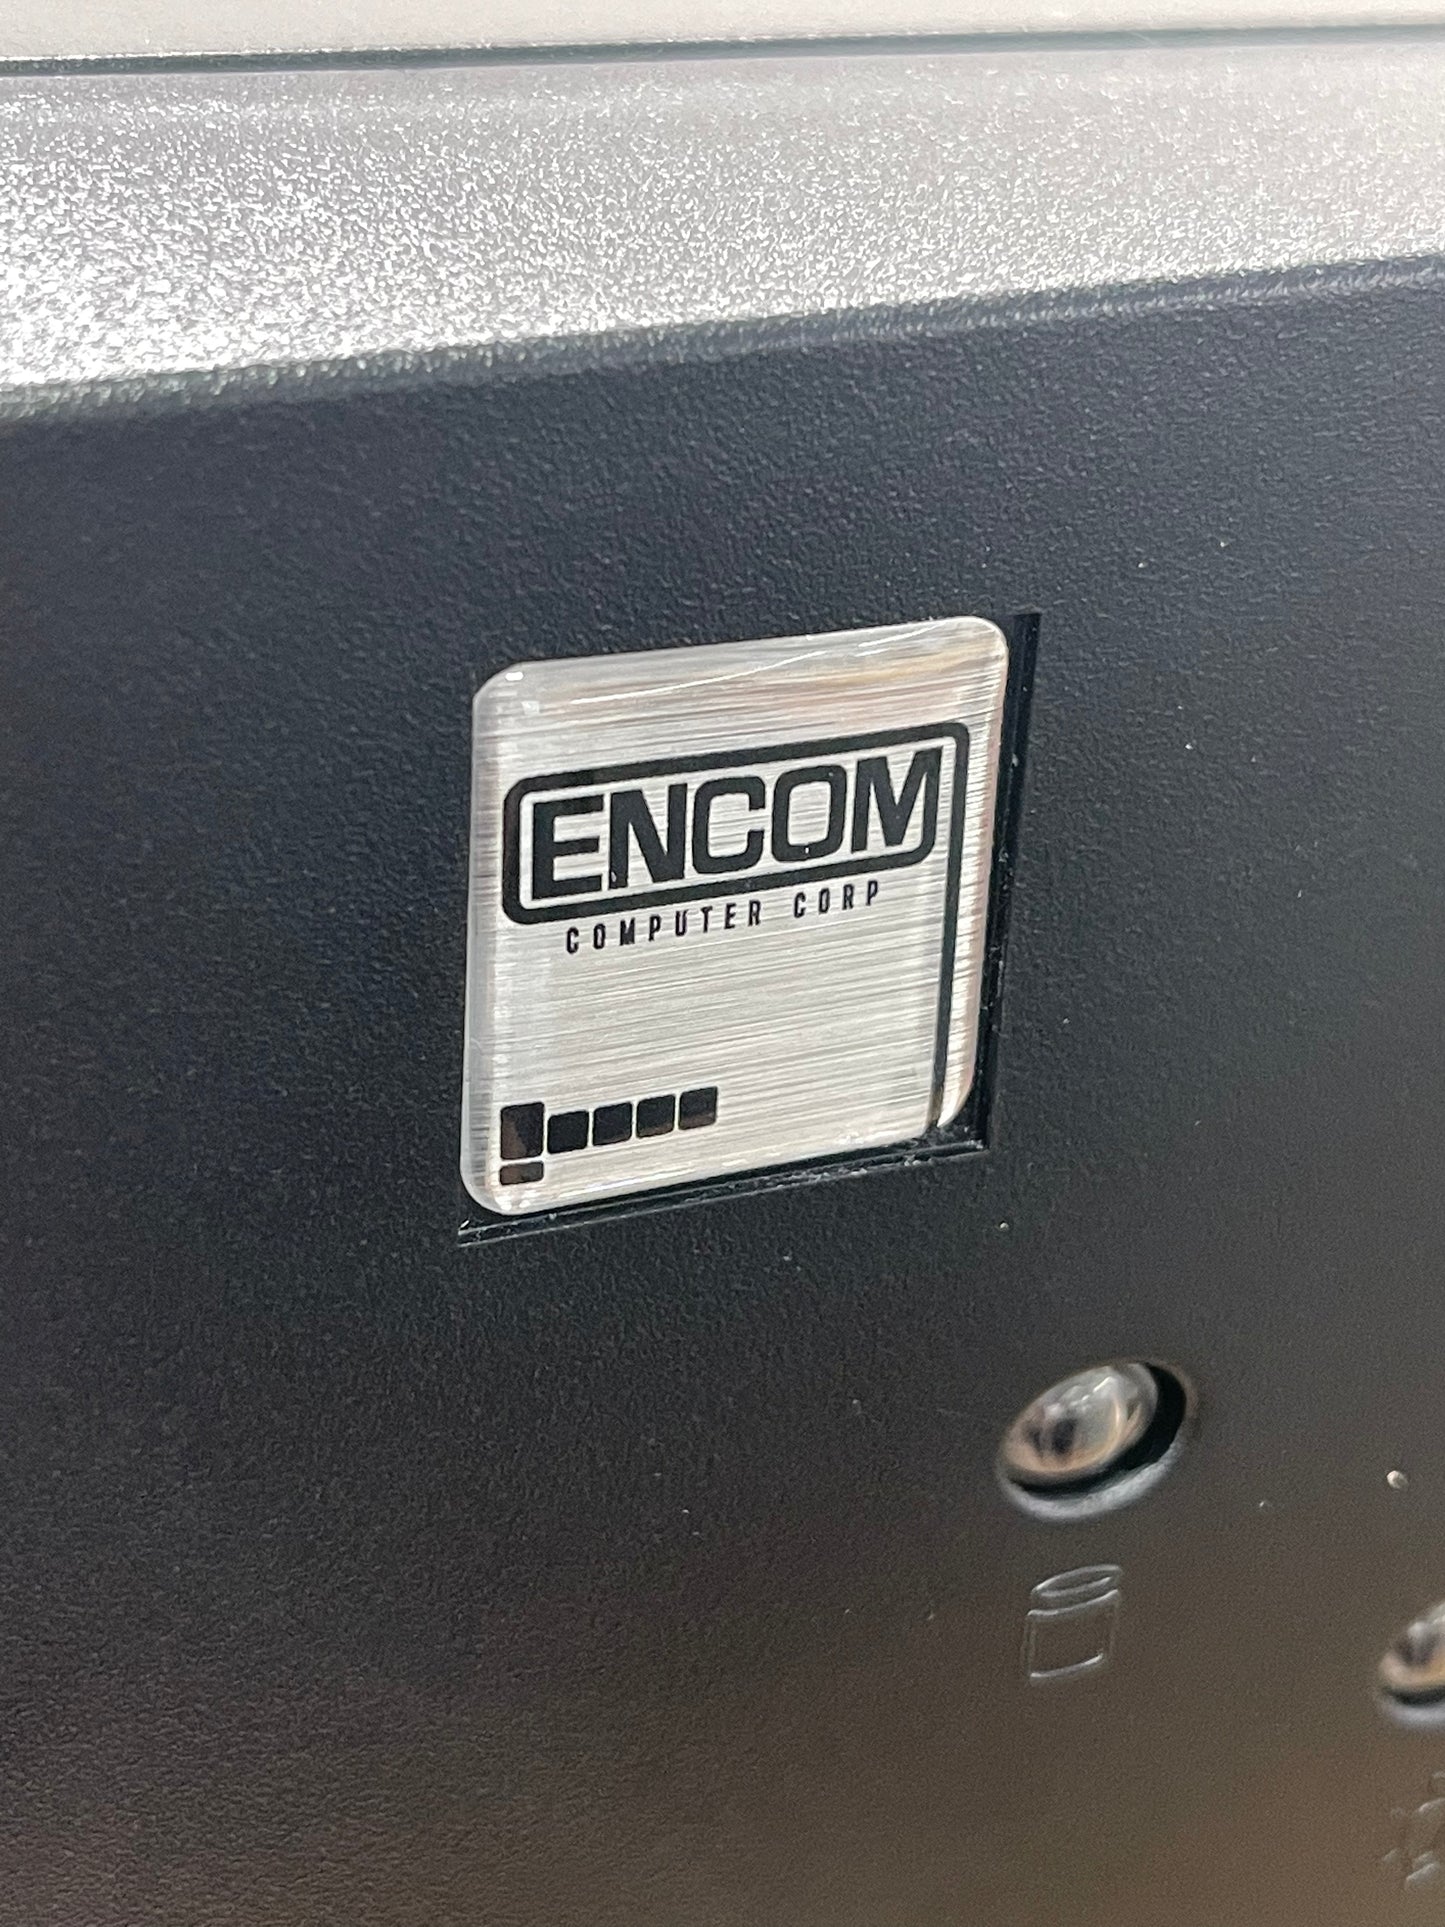 > ENCOM Computer Corp < TRON Case Badge Sticker - Dome Slvr/Blk